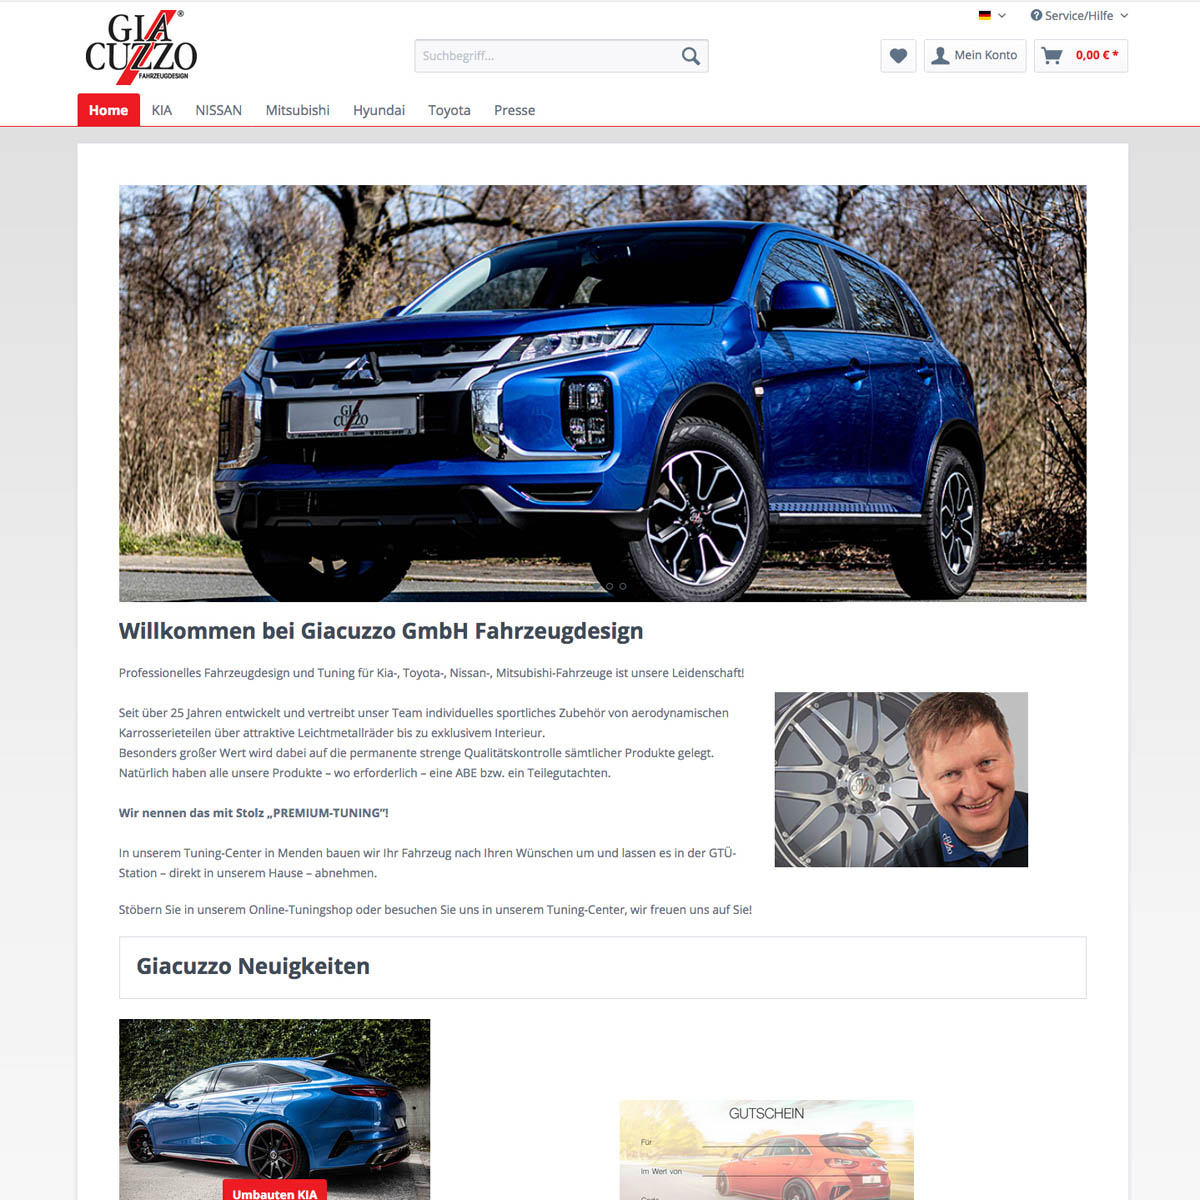 Webshop Giacuzzo Fahrzeugdesign